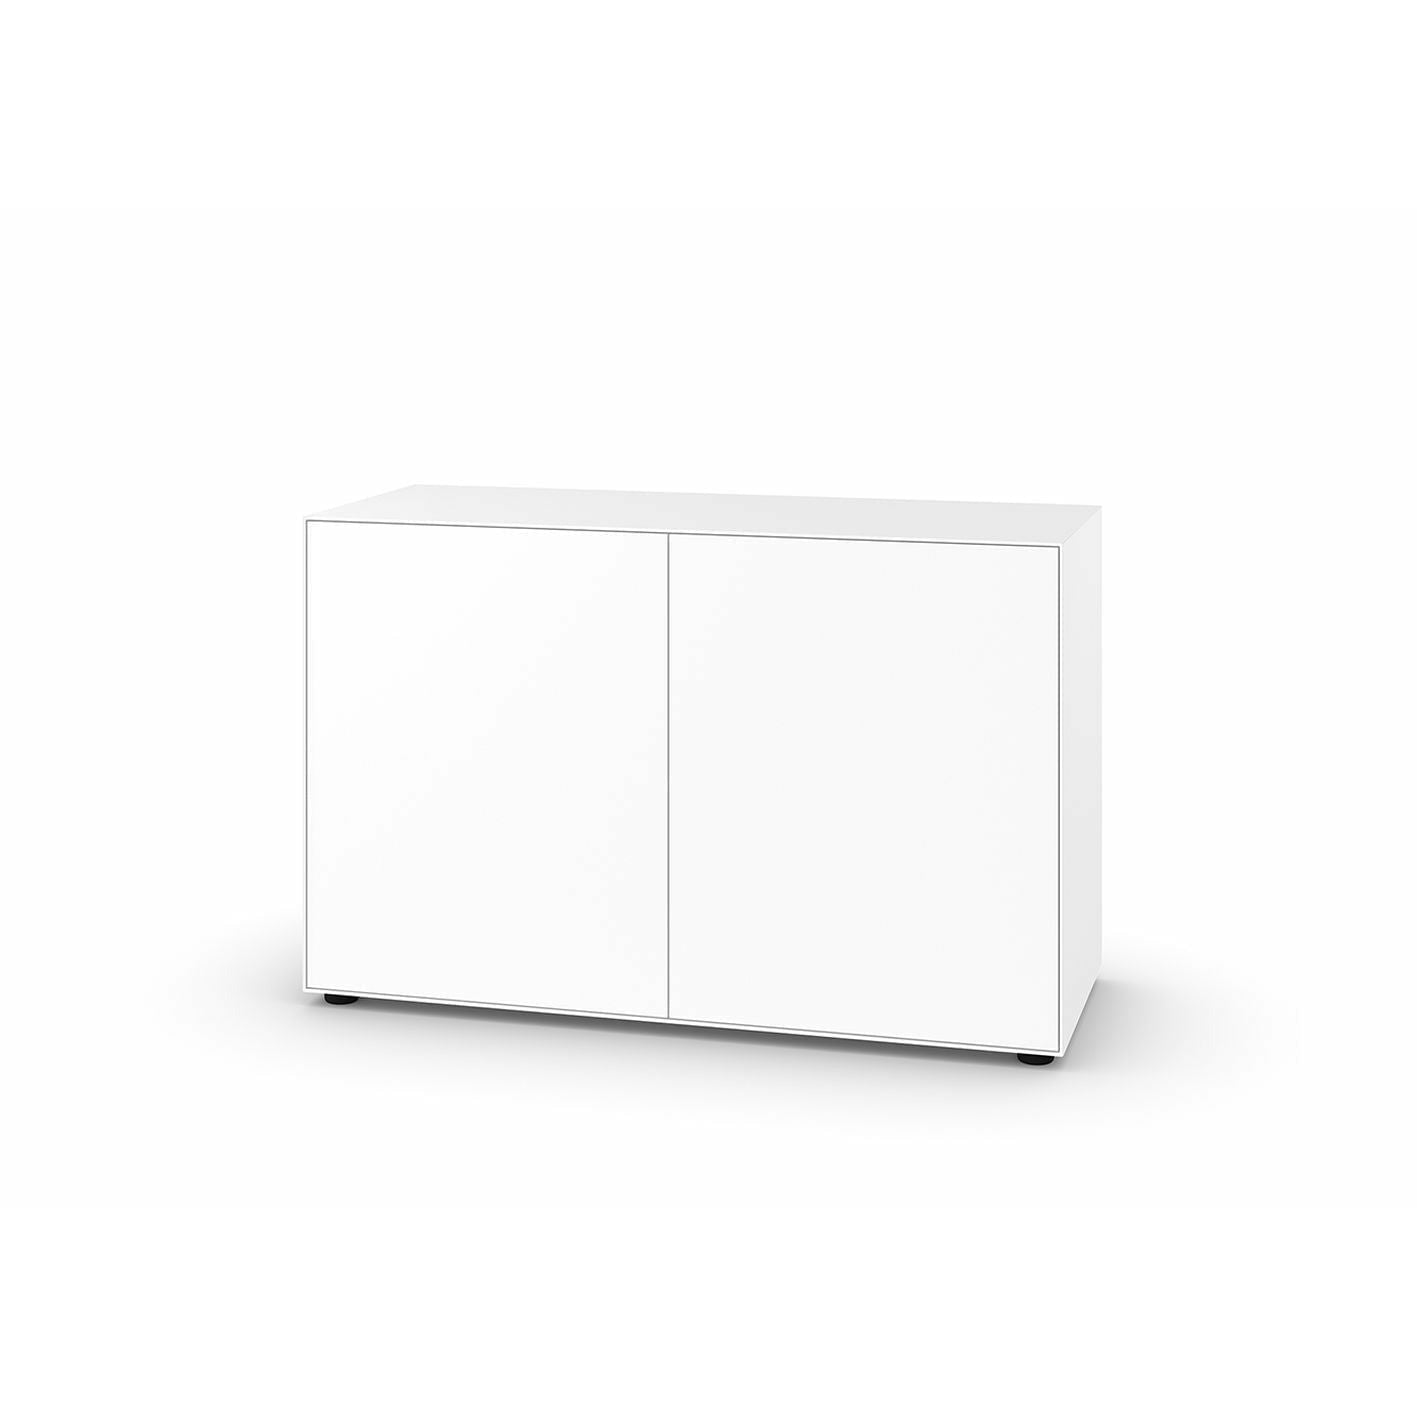 Piure Nex Pur Box Door Hx W 75x120 Cm, 1 Shelf, White